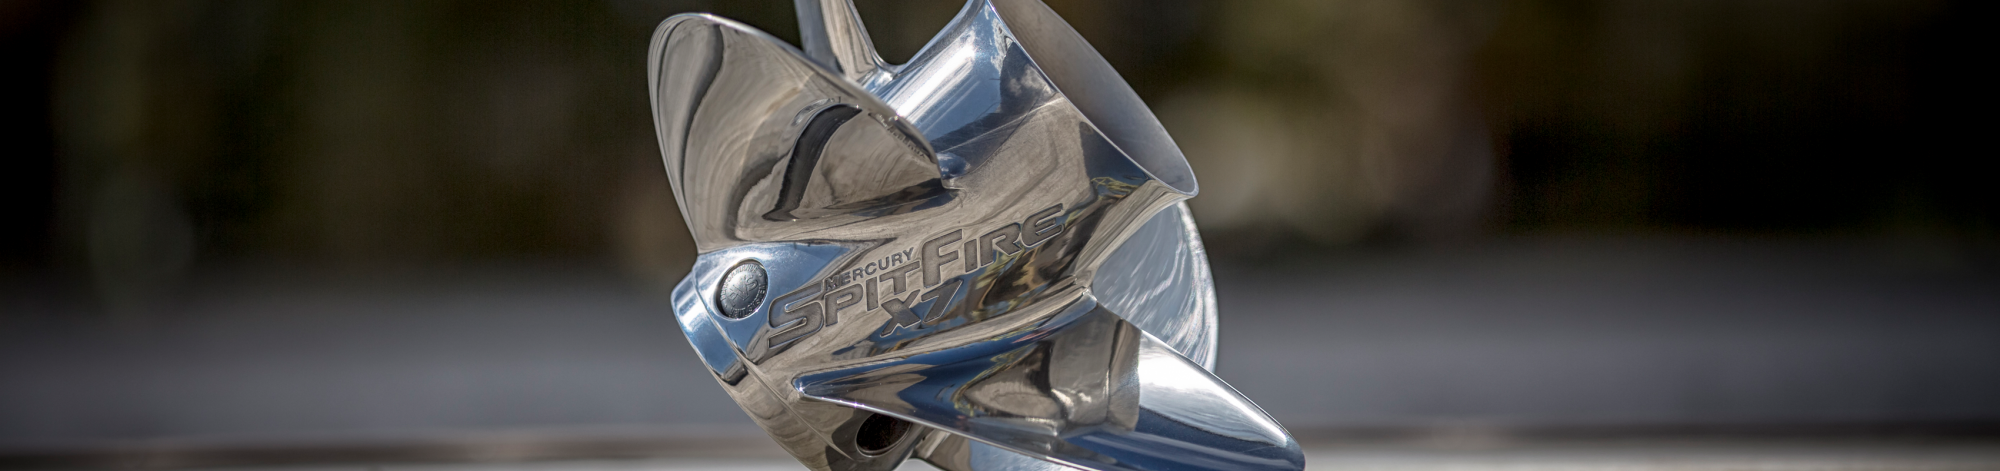 Elite spitfire x7 hero product family 3400w 800h e1536176419357